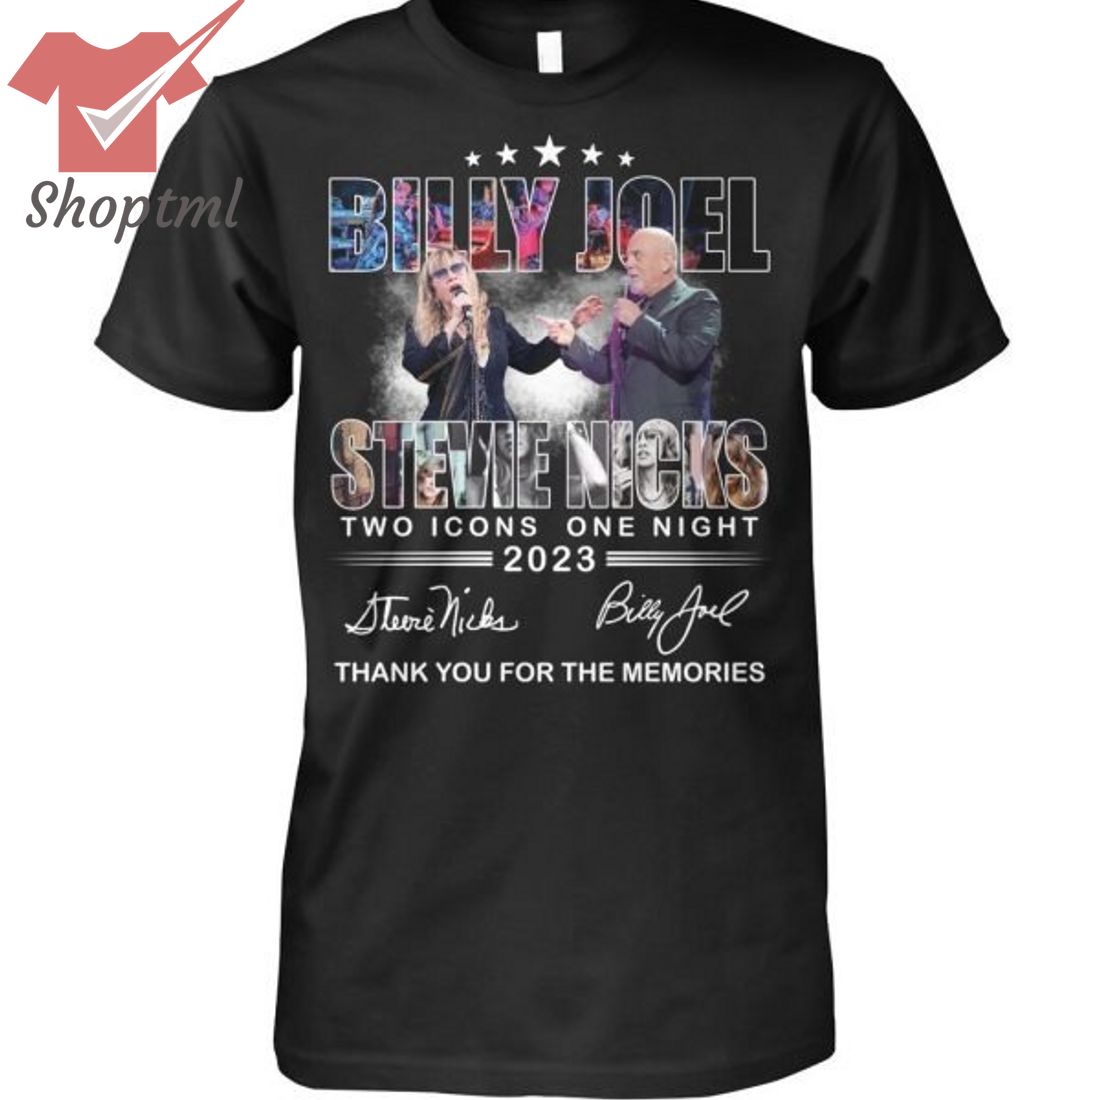 Billy Joel Stevie Nicks Two Icons One Night 2023 Shirt